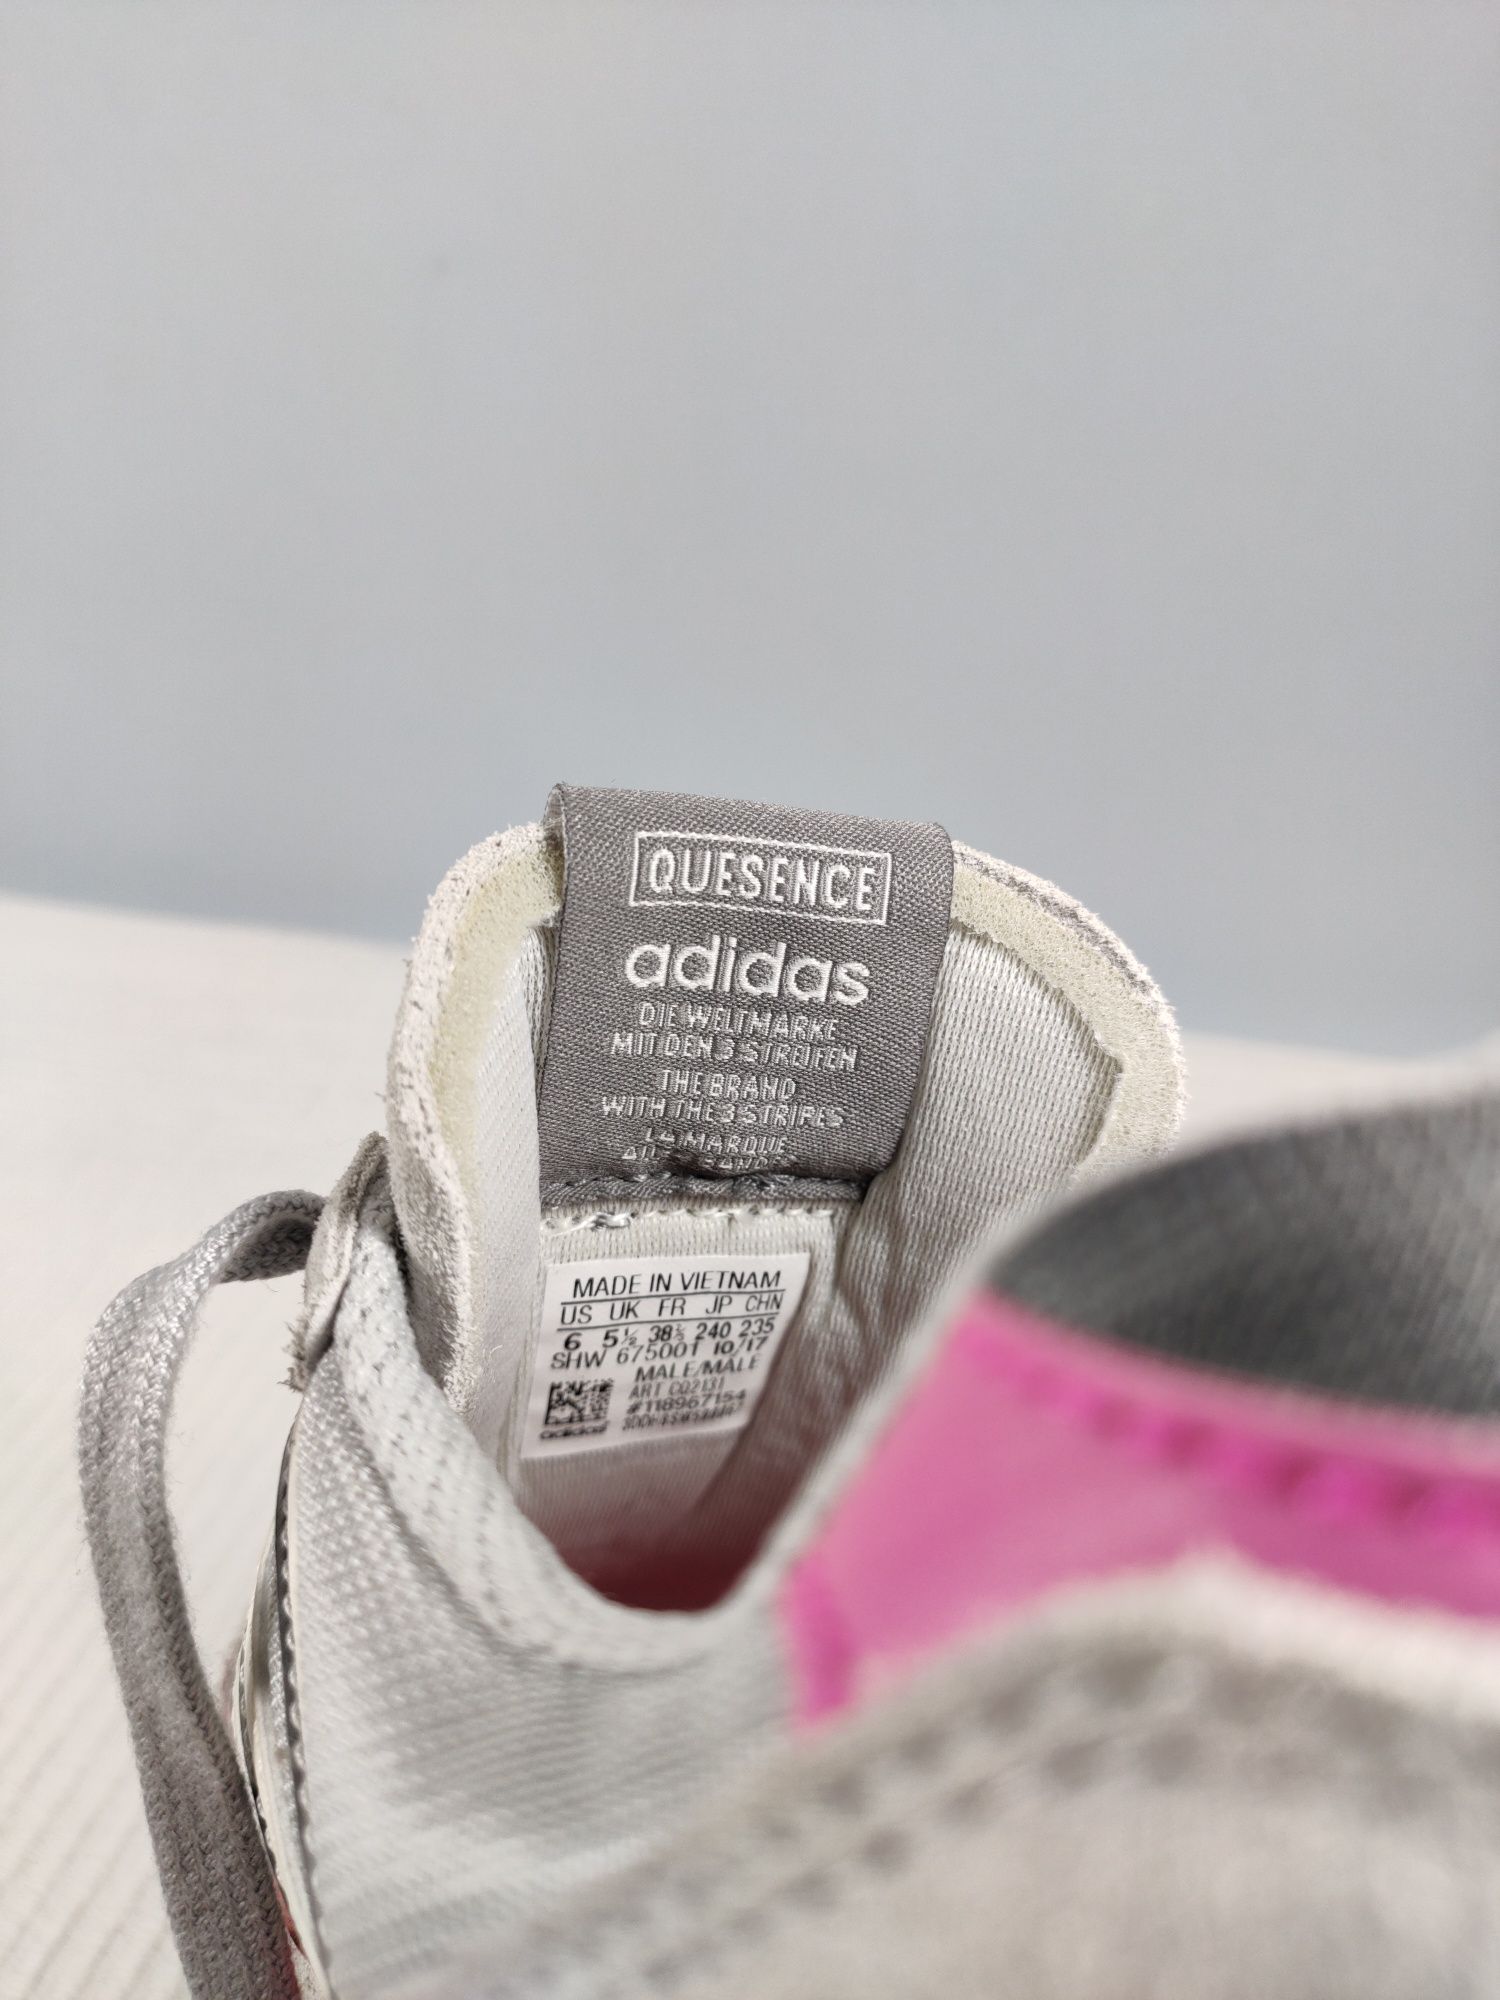 Buty sneakersy Adidas Quesence damskie skórzane r. 38 2/3 24cm